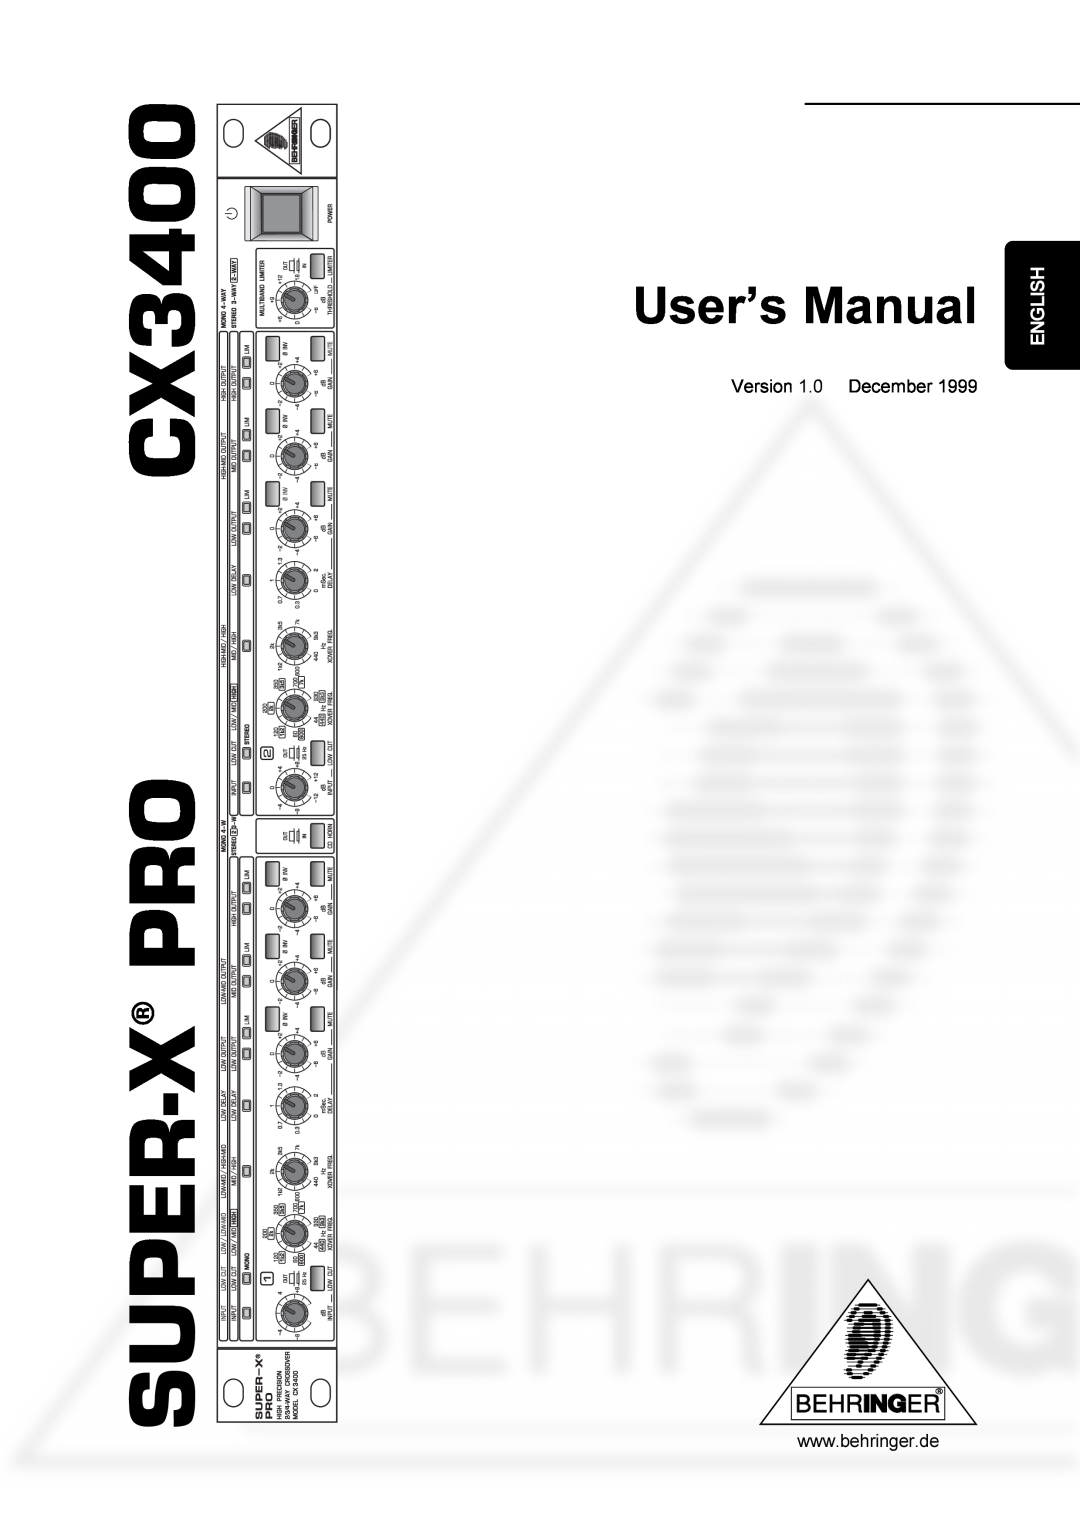 Behringer manual DATA-MANFULL CX3400 E Rev.B.p65, 29.11.00, 13, VERSION1.2 November 